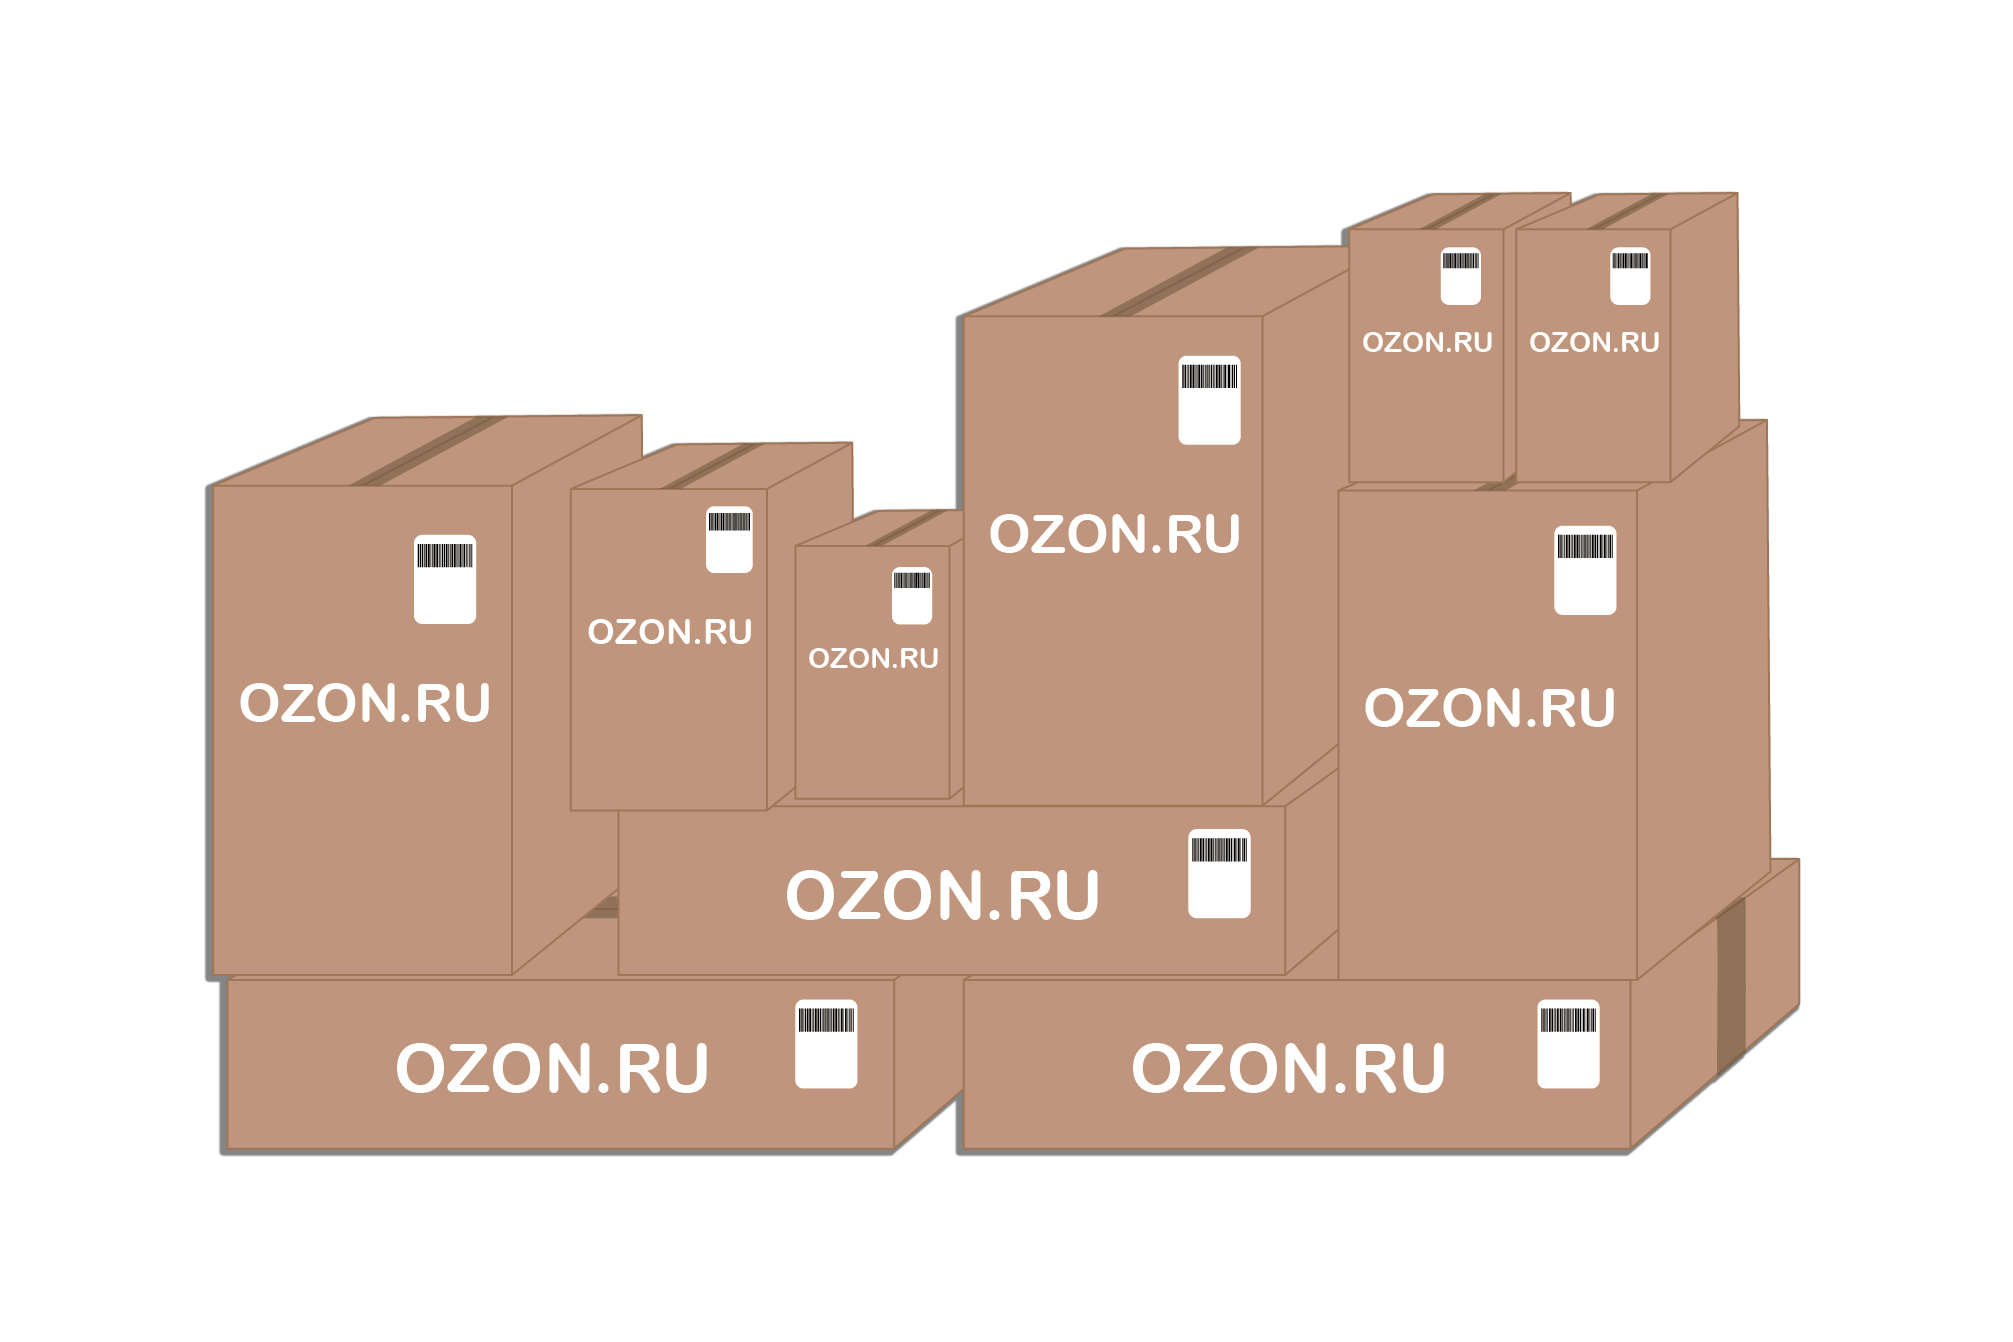 Упаковка для товаров озон pvlogistic ru. OZON упаковка товара. Упаковка товара для FBO. Размер коробки Озон. Этикетка на коробку Озон.